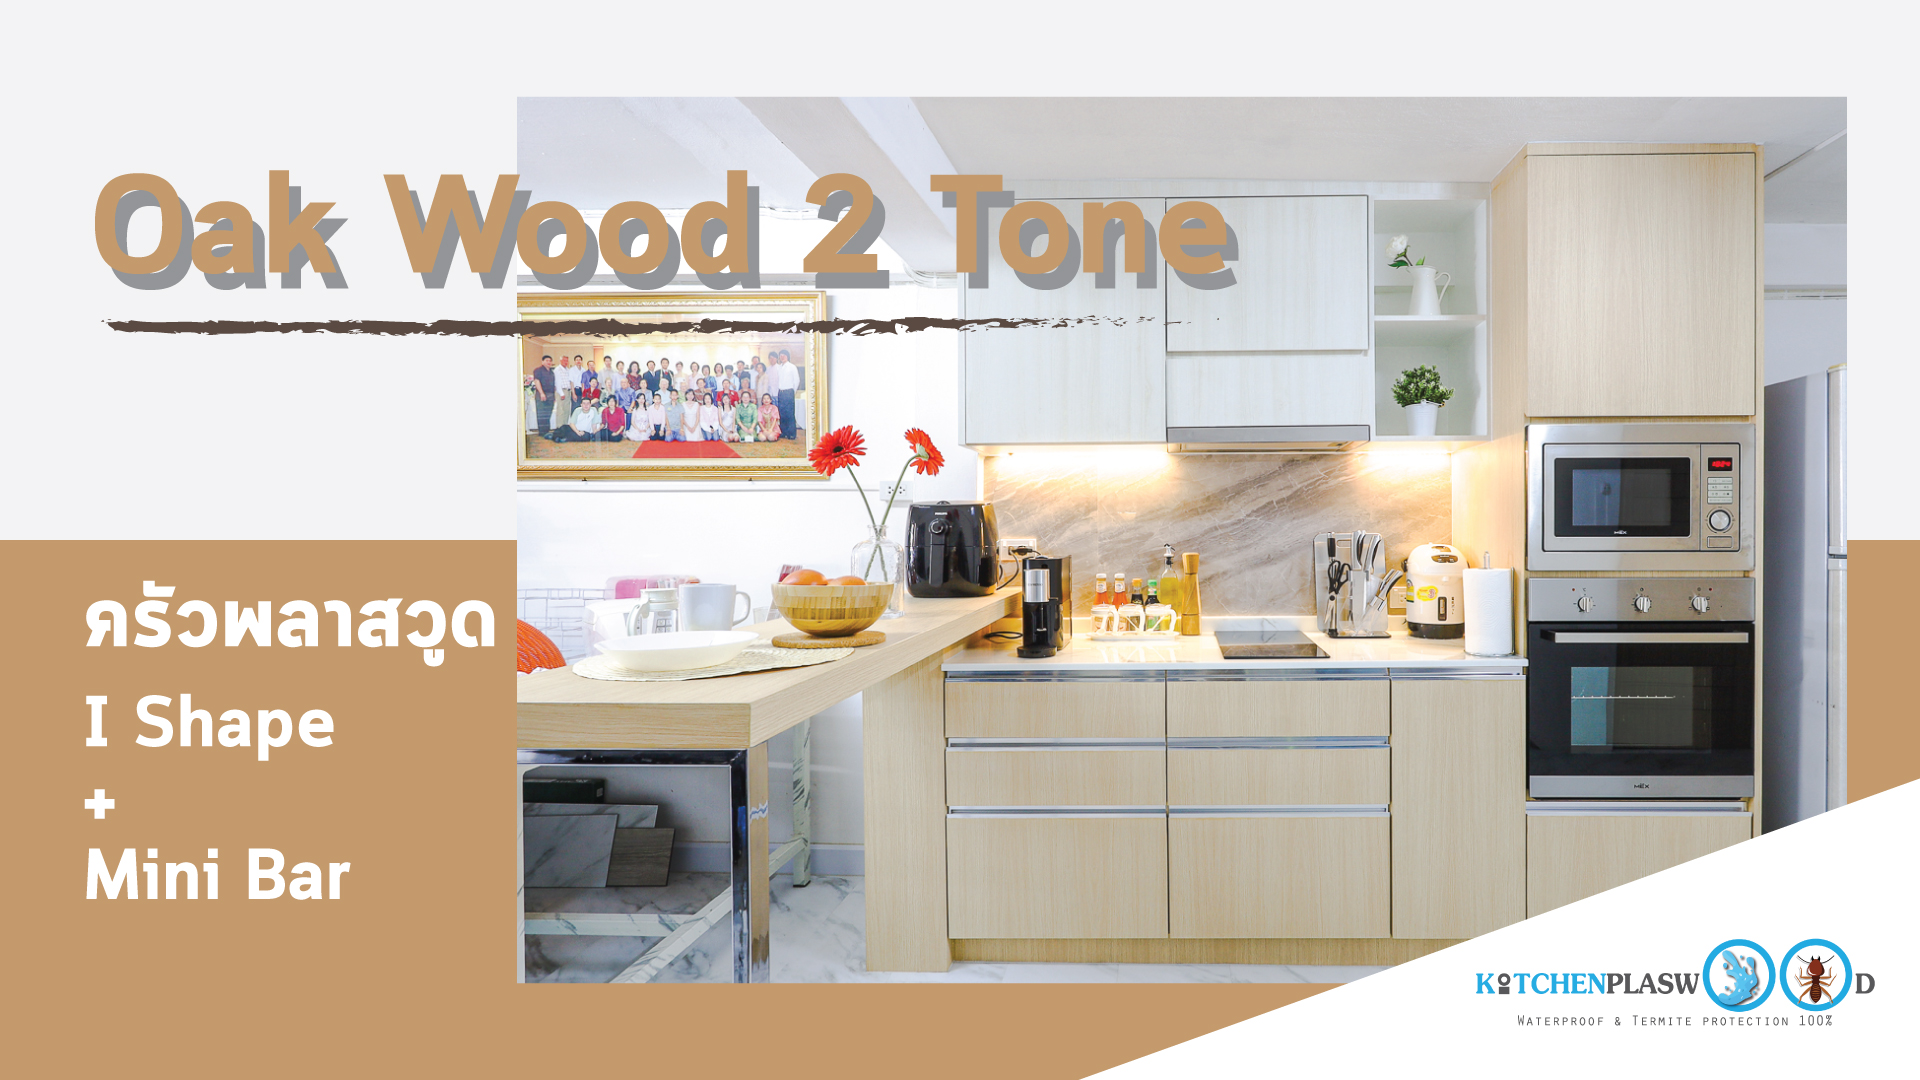 Oak Wood 2 Tone : ครัวลายไม้ I Shape + Mini Bar, ชุดครัว, รีวิวชุดครัว,